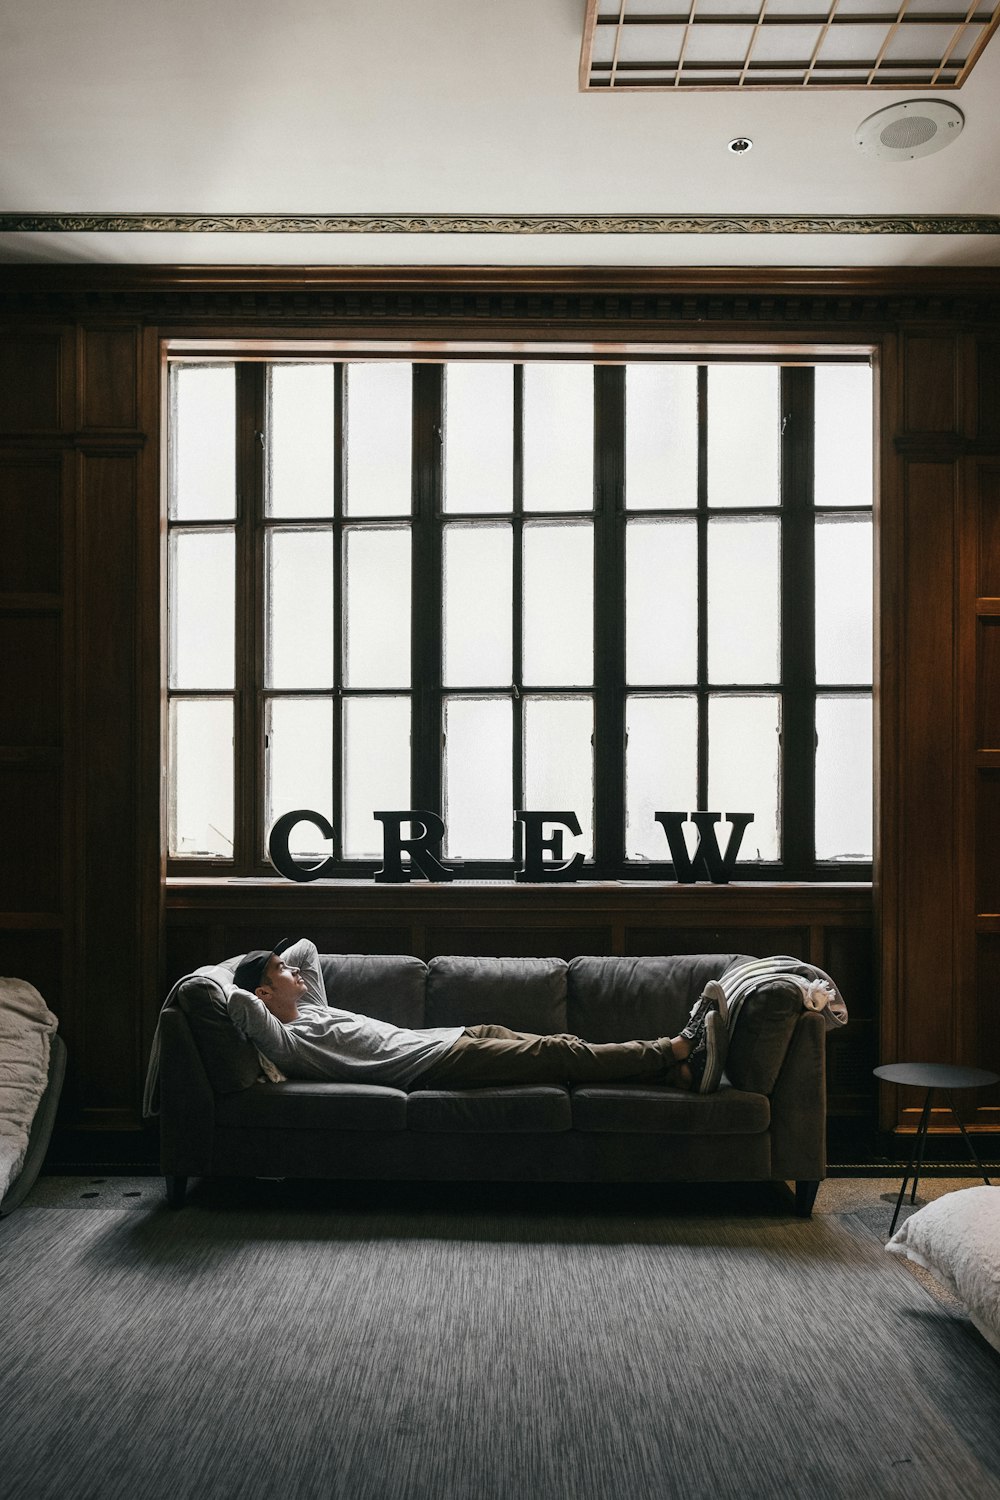 photo of person laying on sofa near window